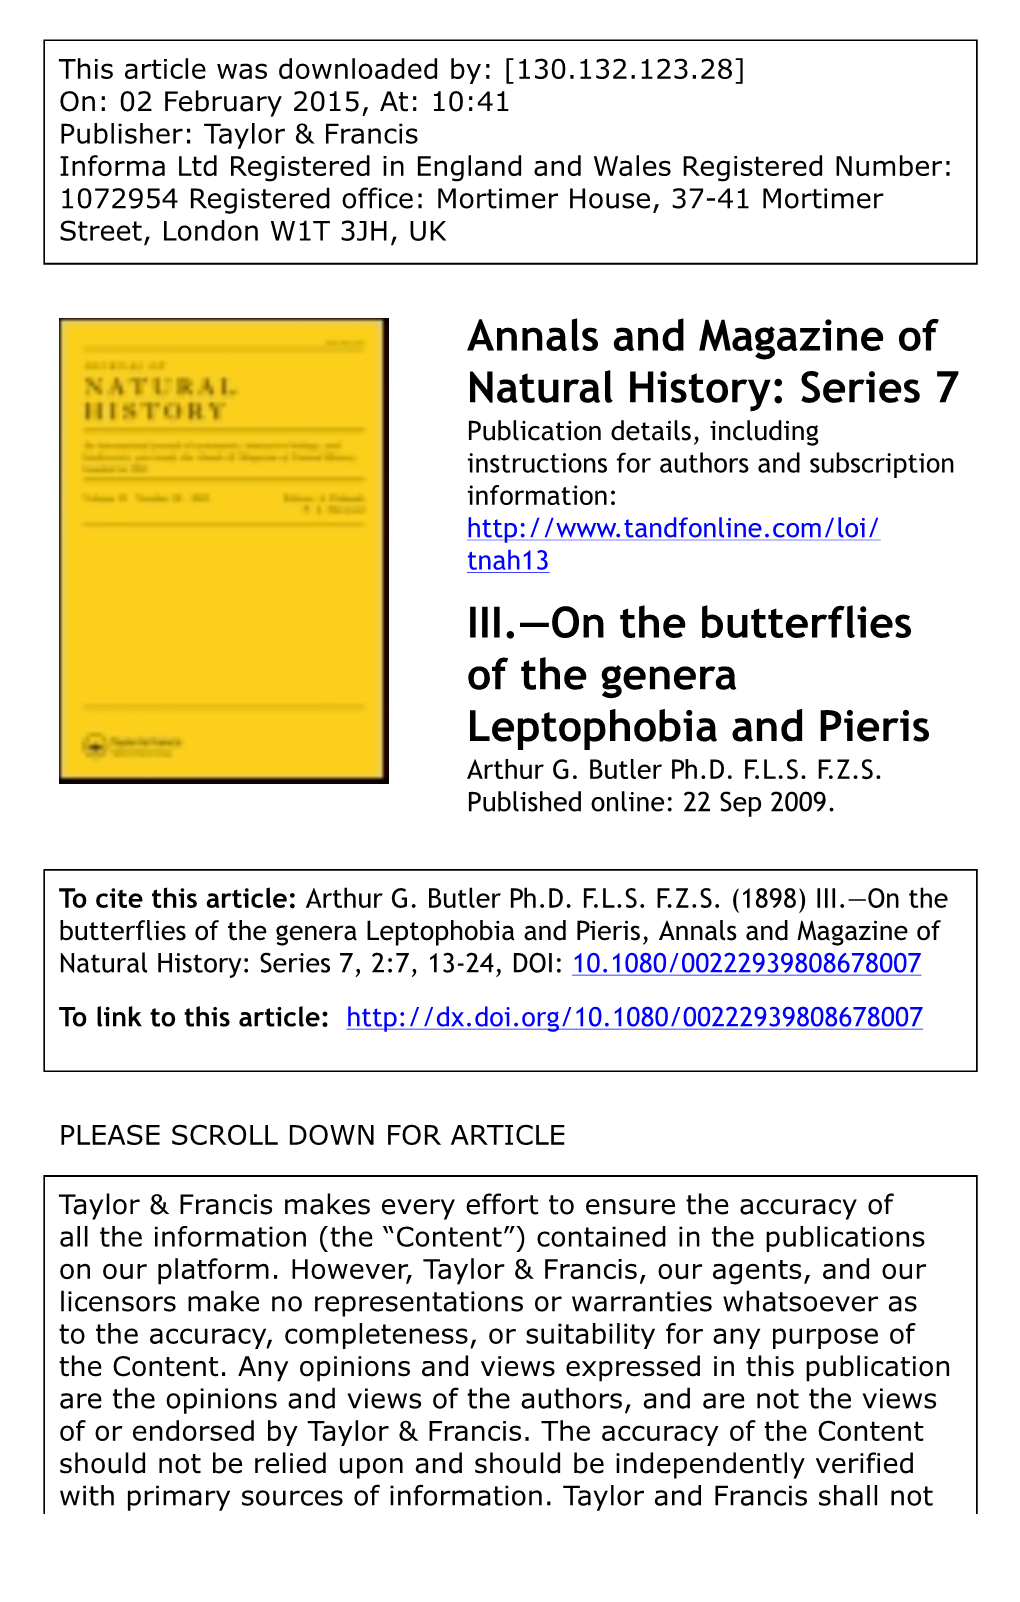 Series 7 III.—On the Butterflies of the Genera Leptophobia